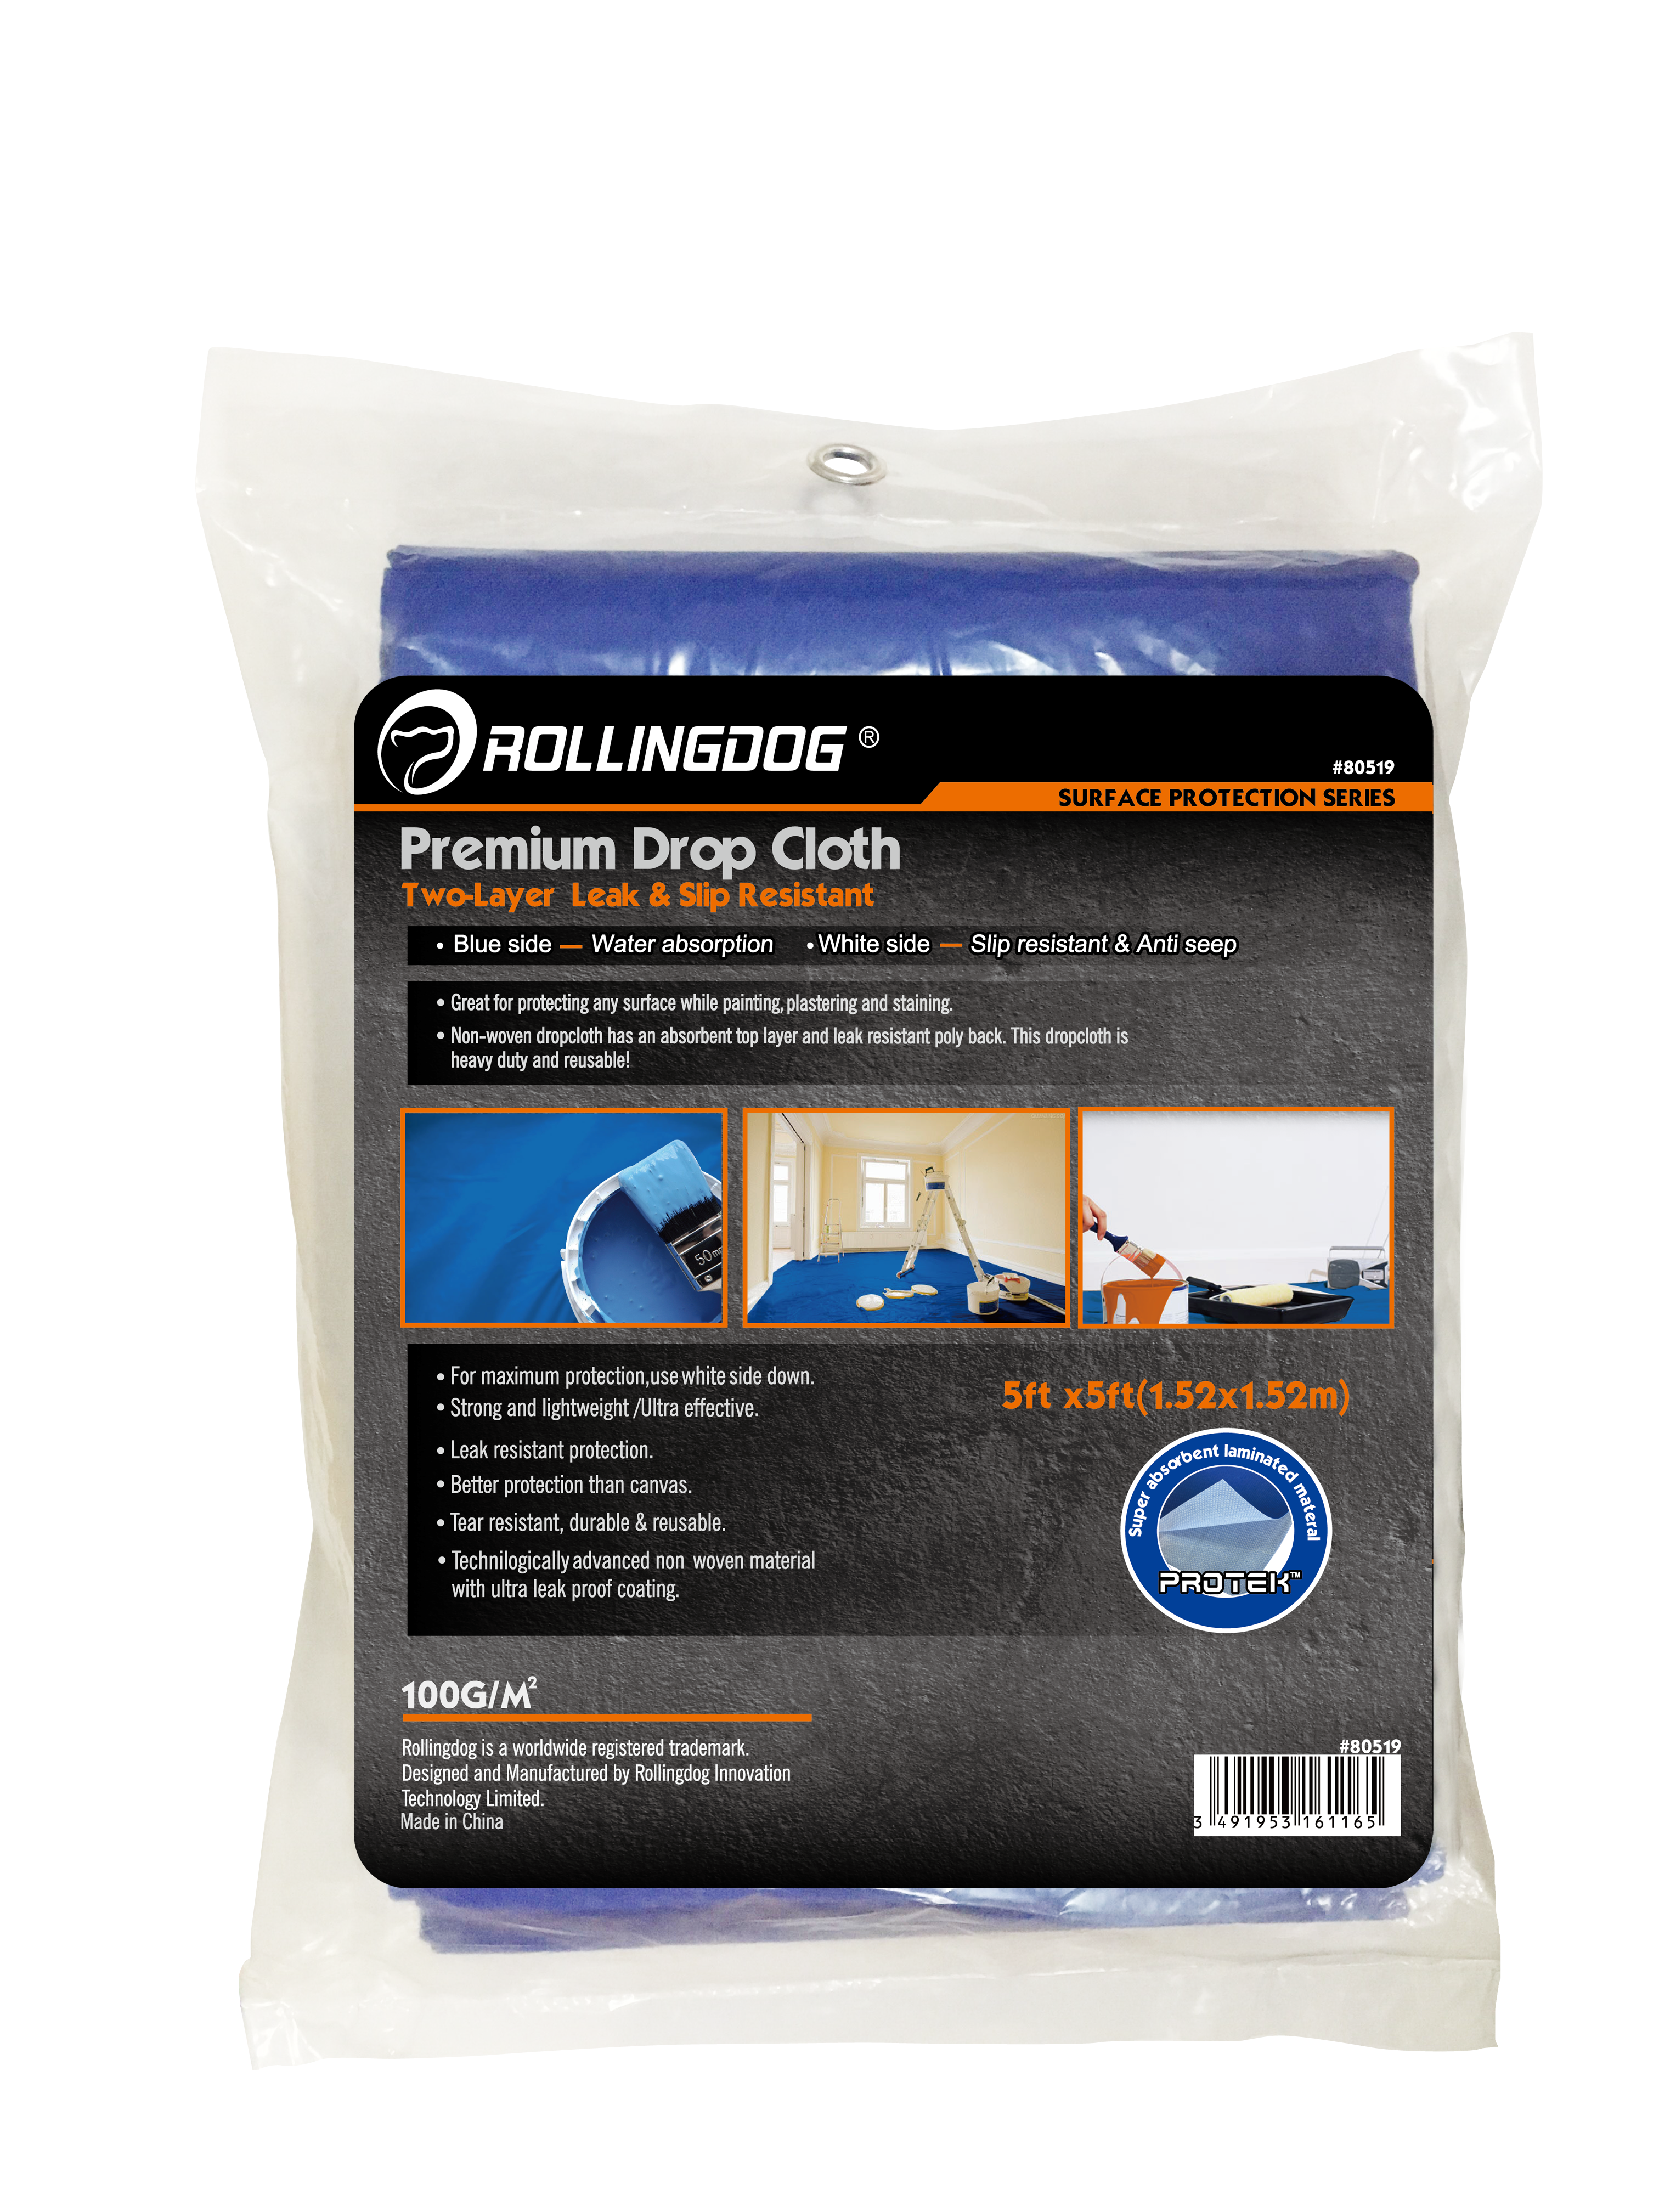 Premium Drop cloth